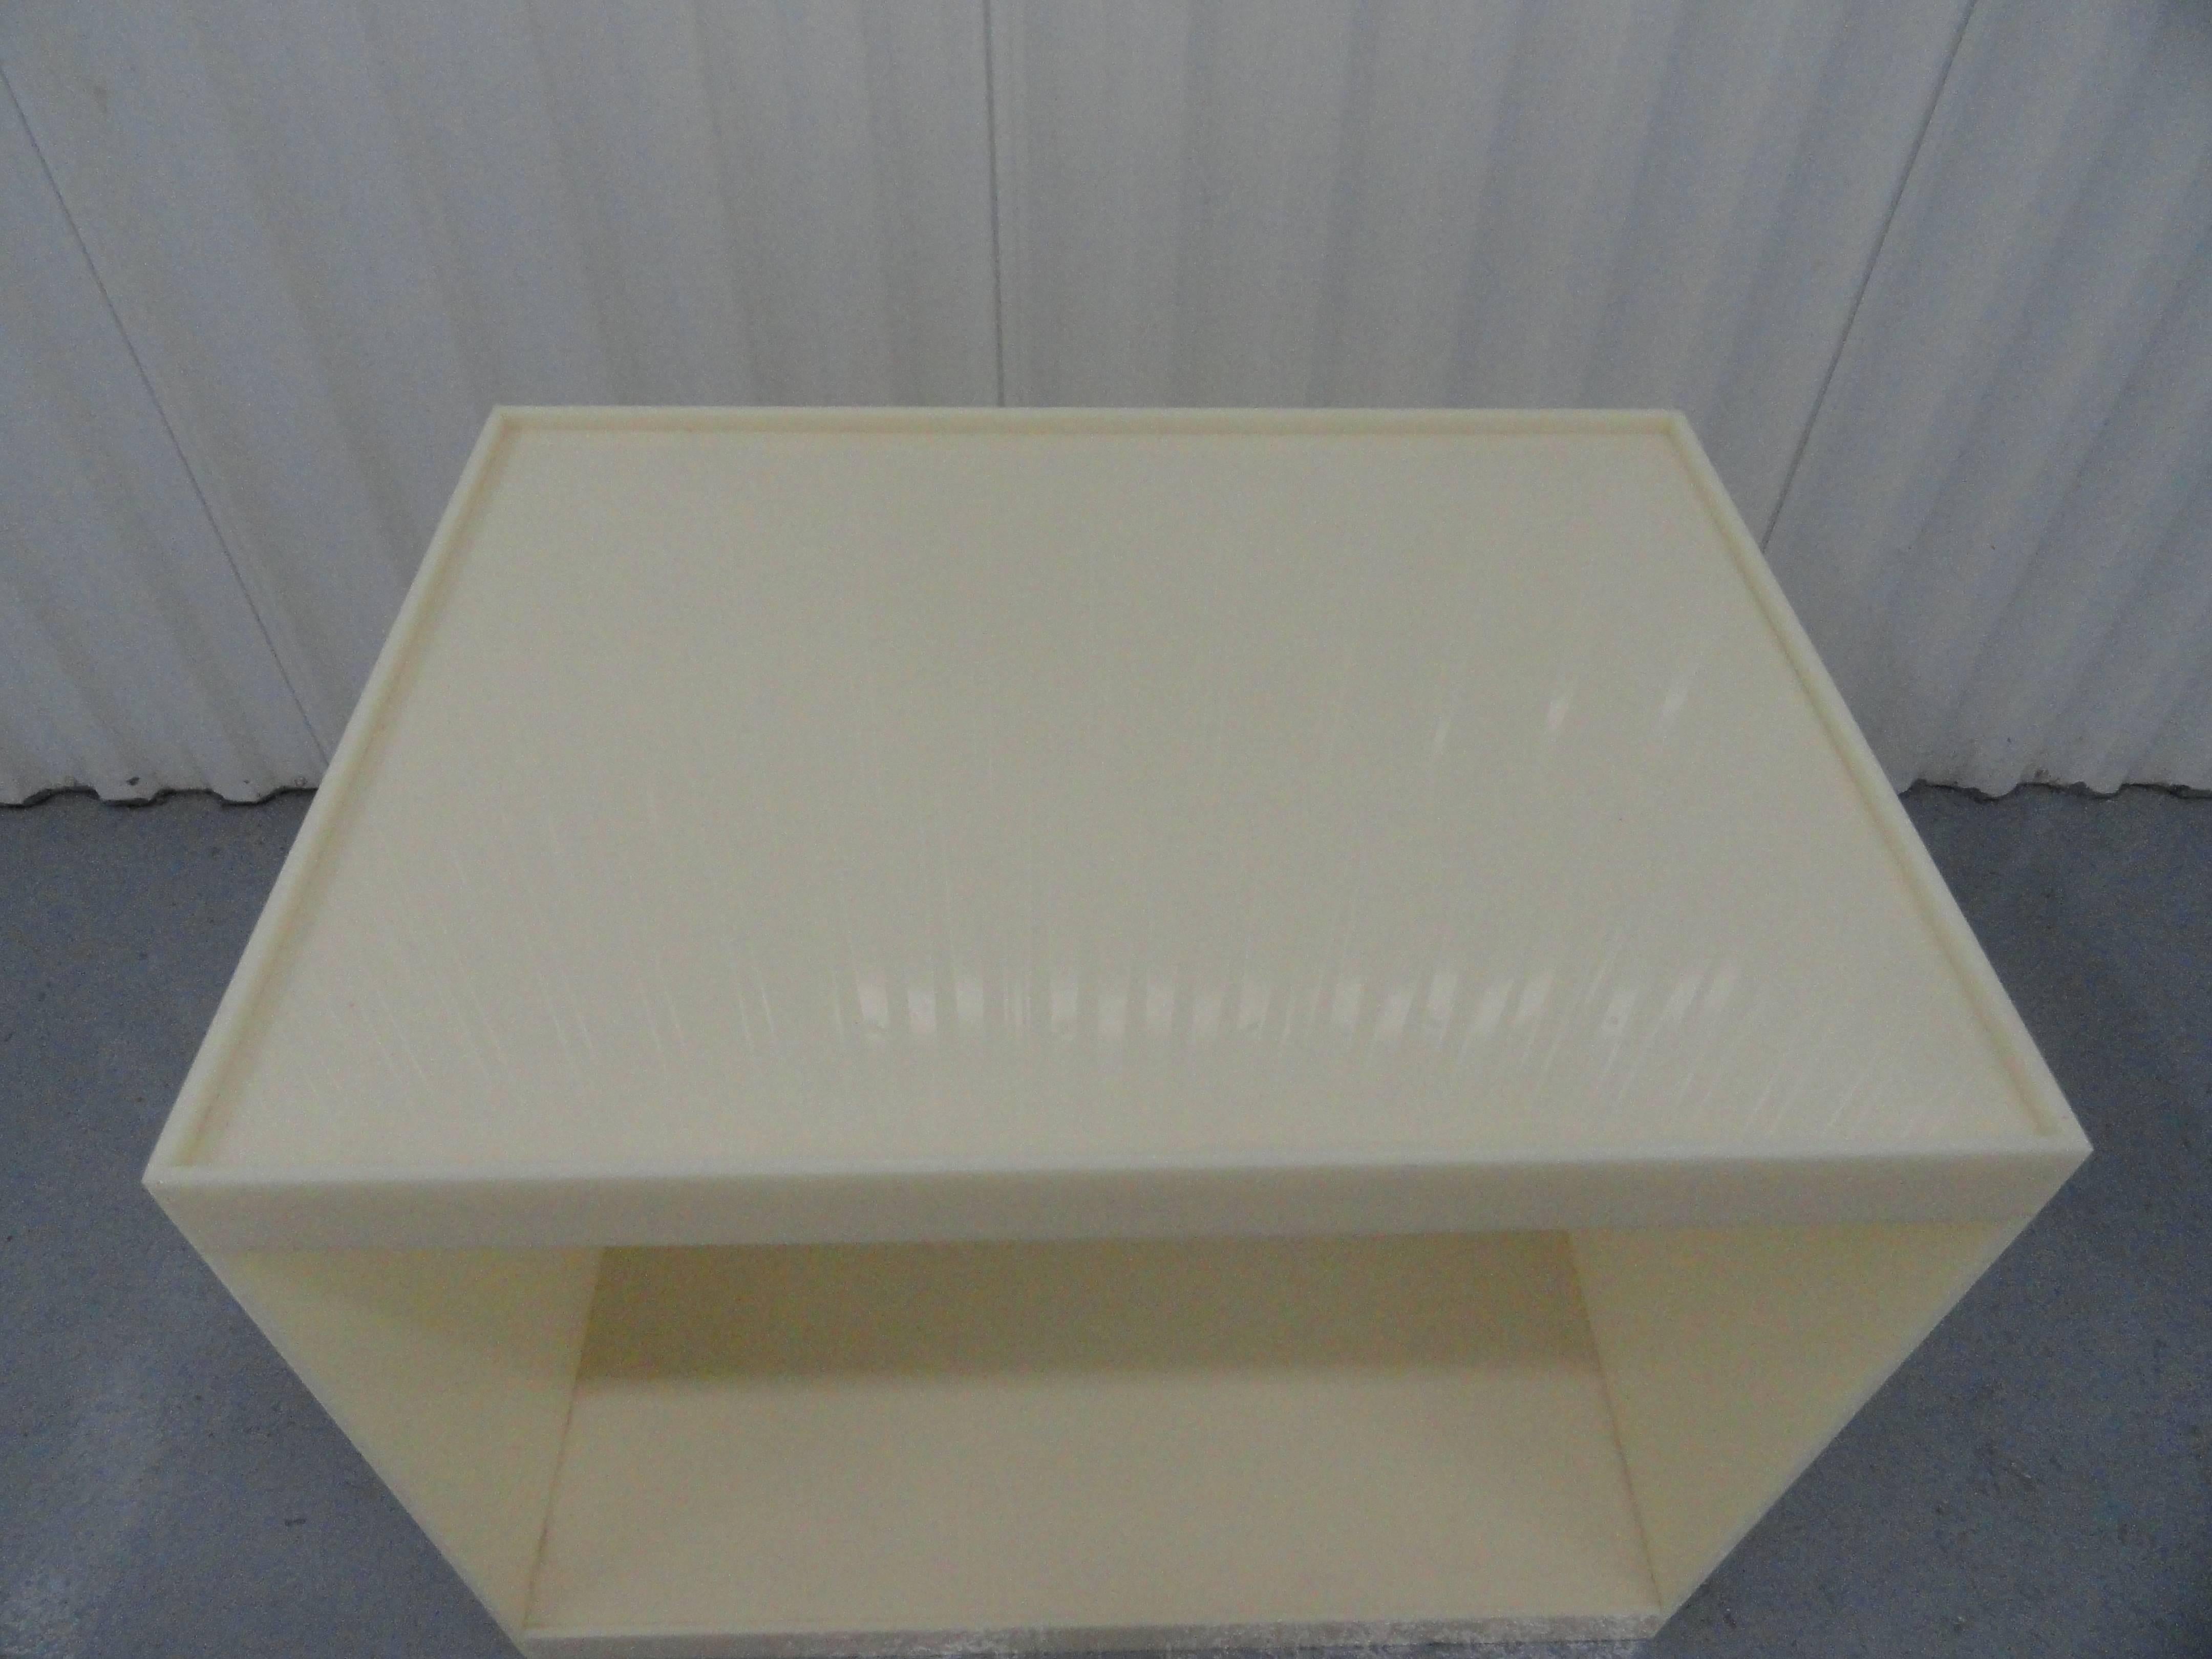 Custom acrylic side table in a cream color.